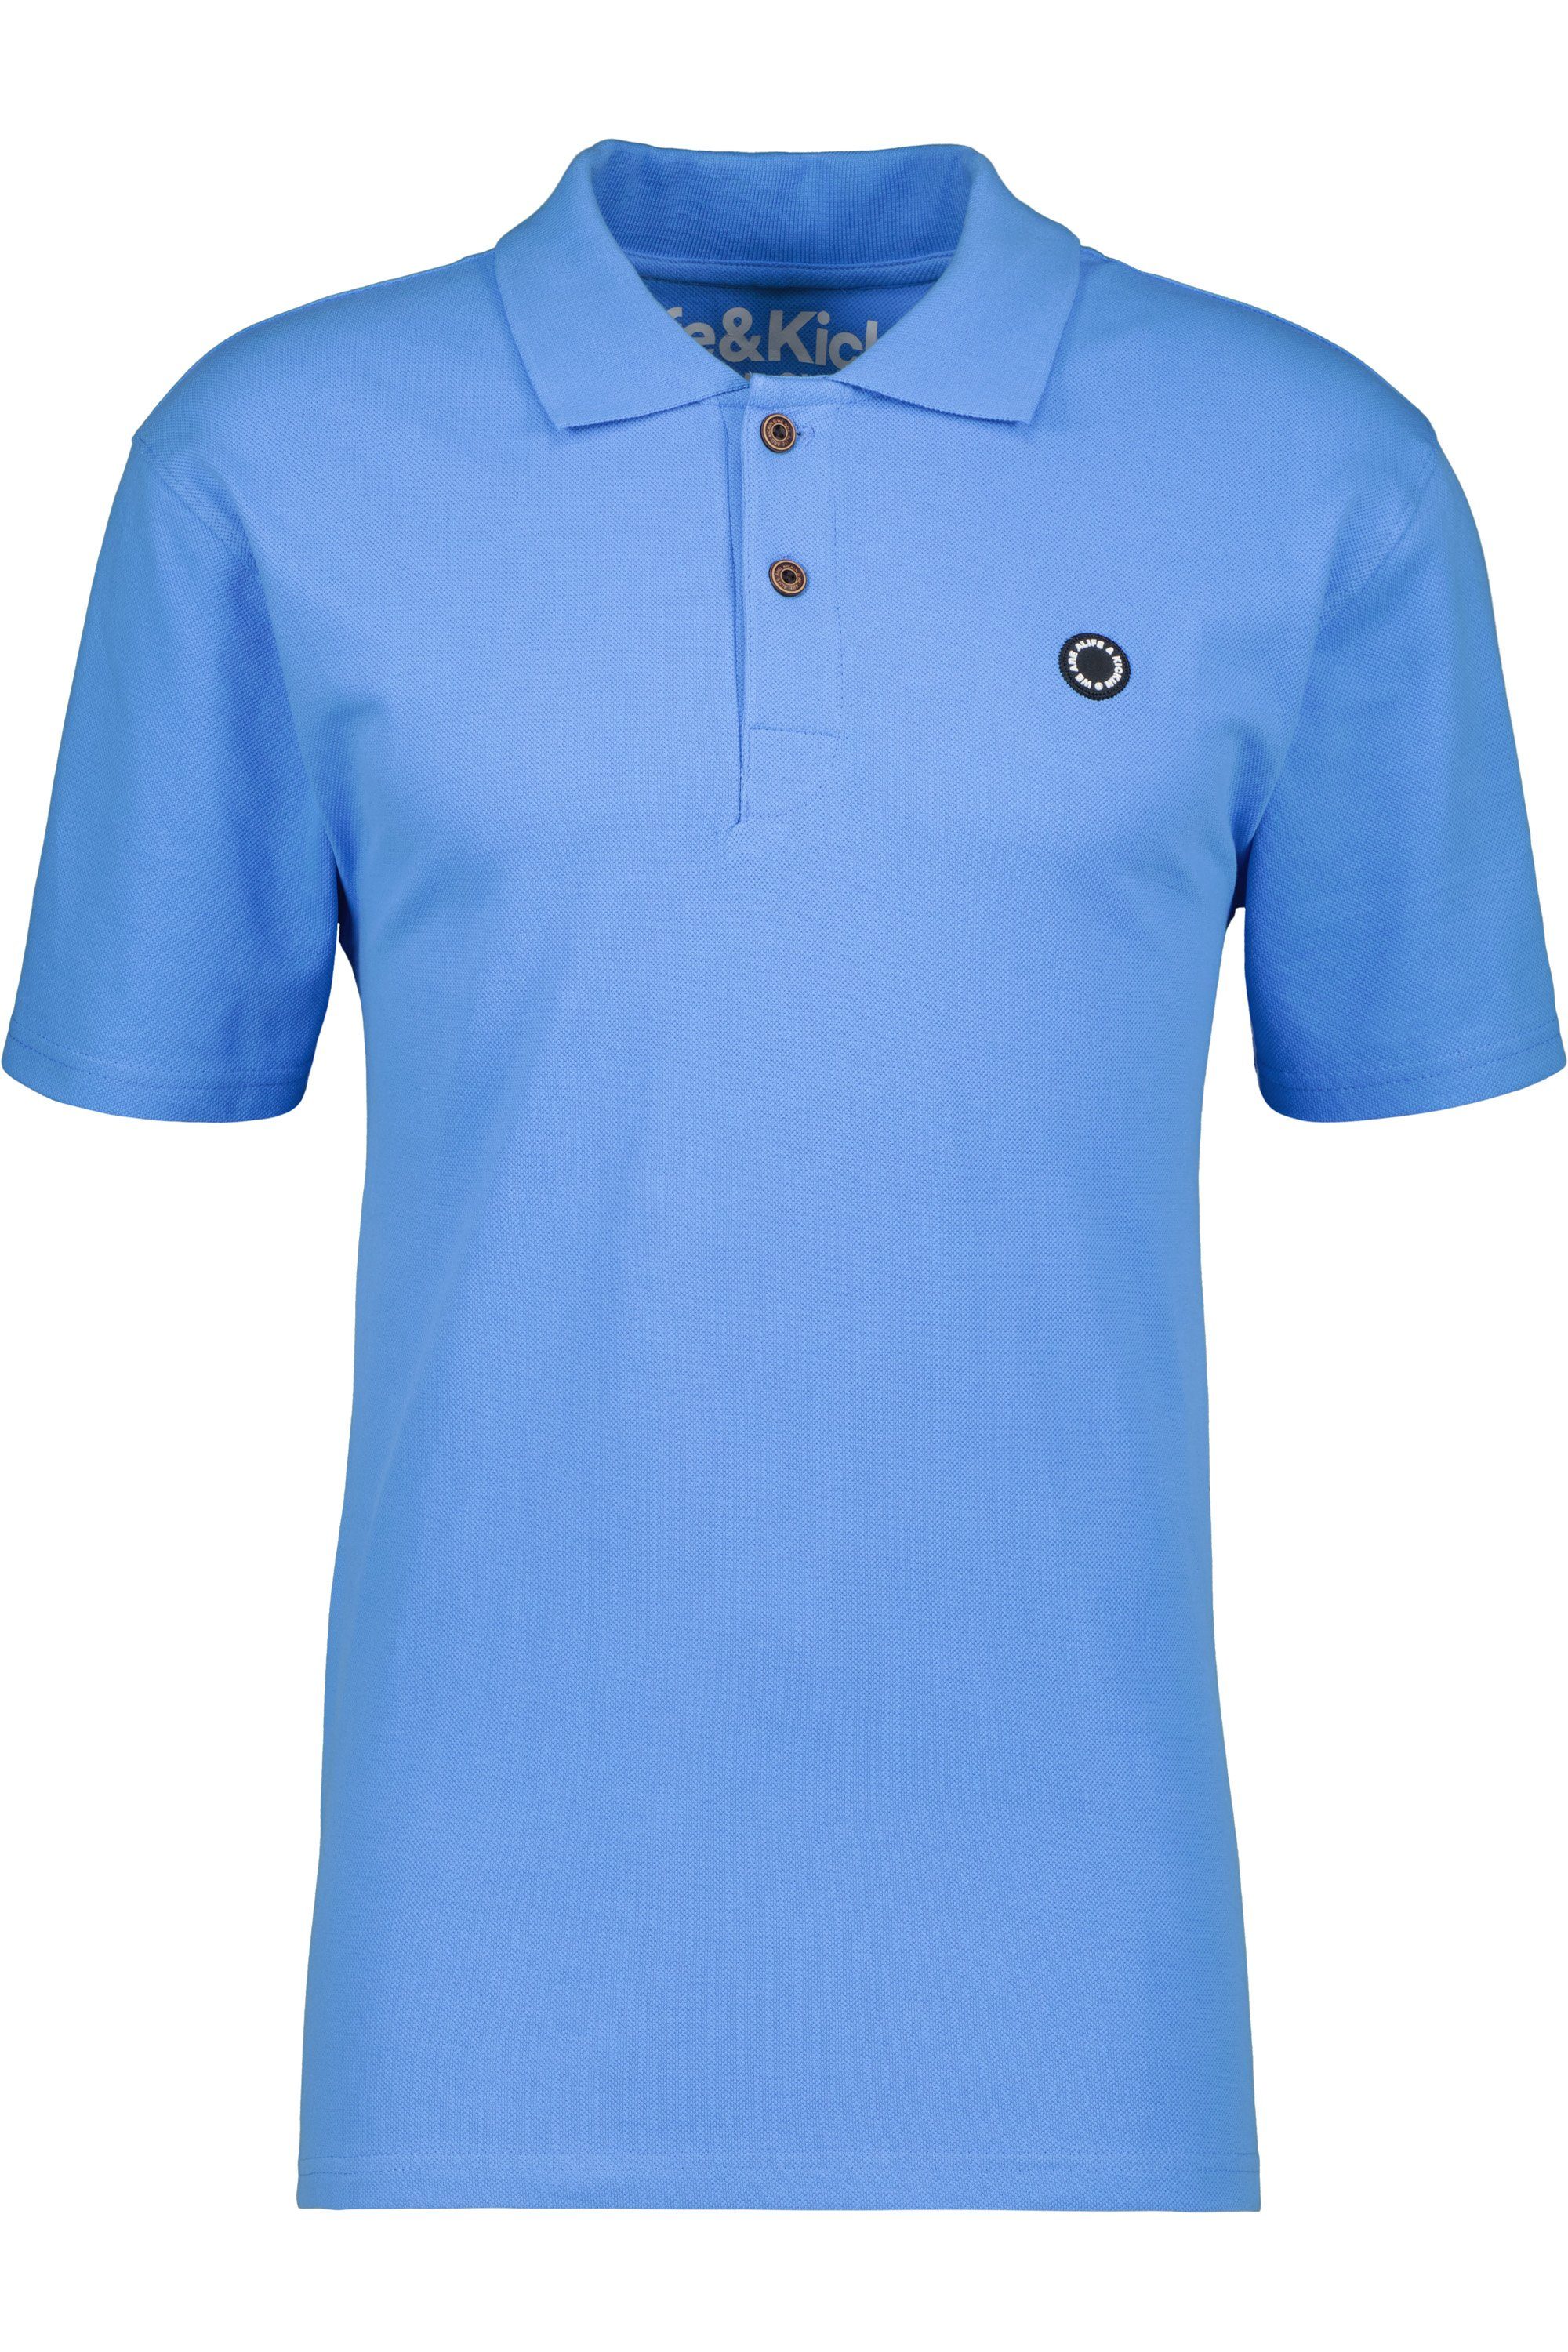 Poloshirt, azure Alife Poloshirt Shirt Polo A Kickin & Herren PaulAK Shirt